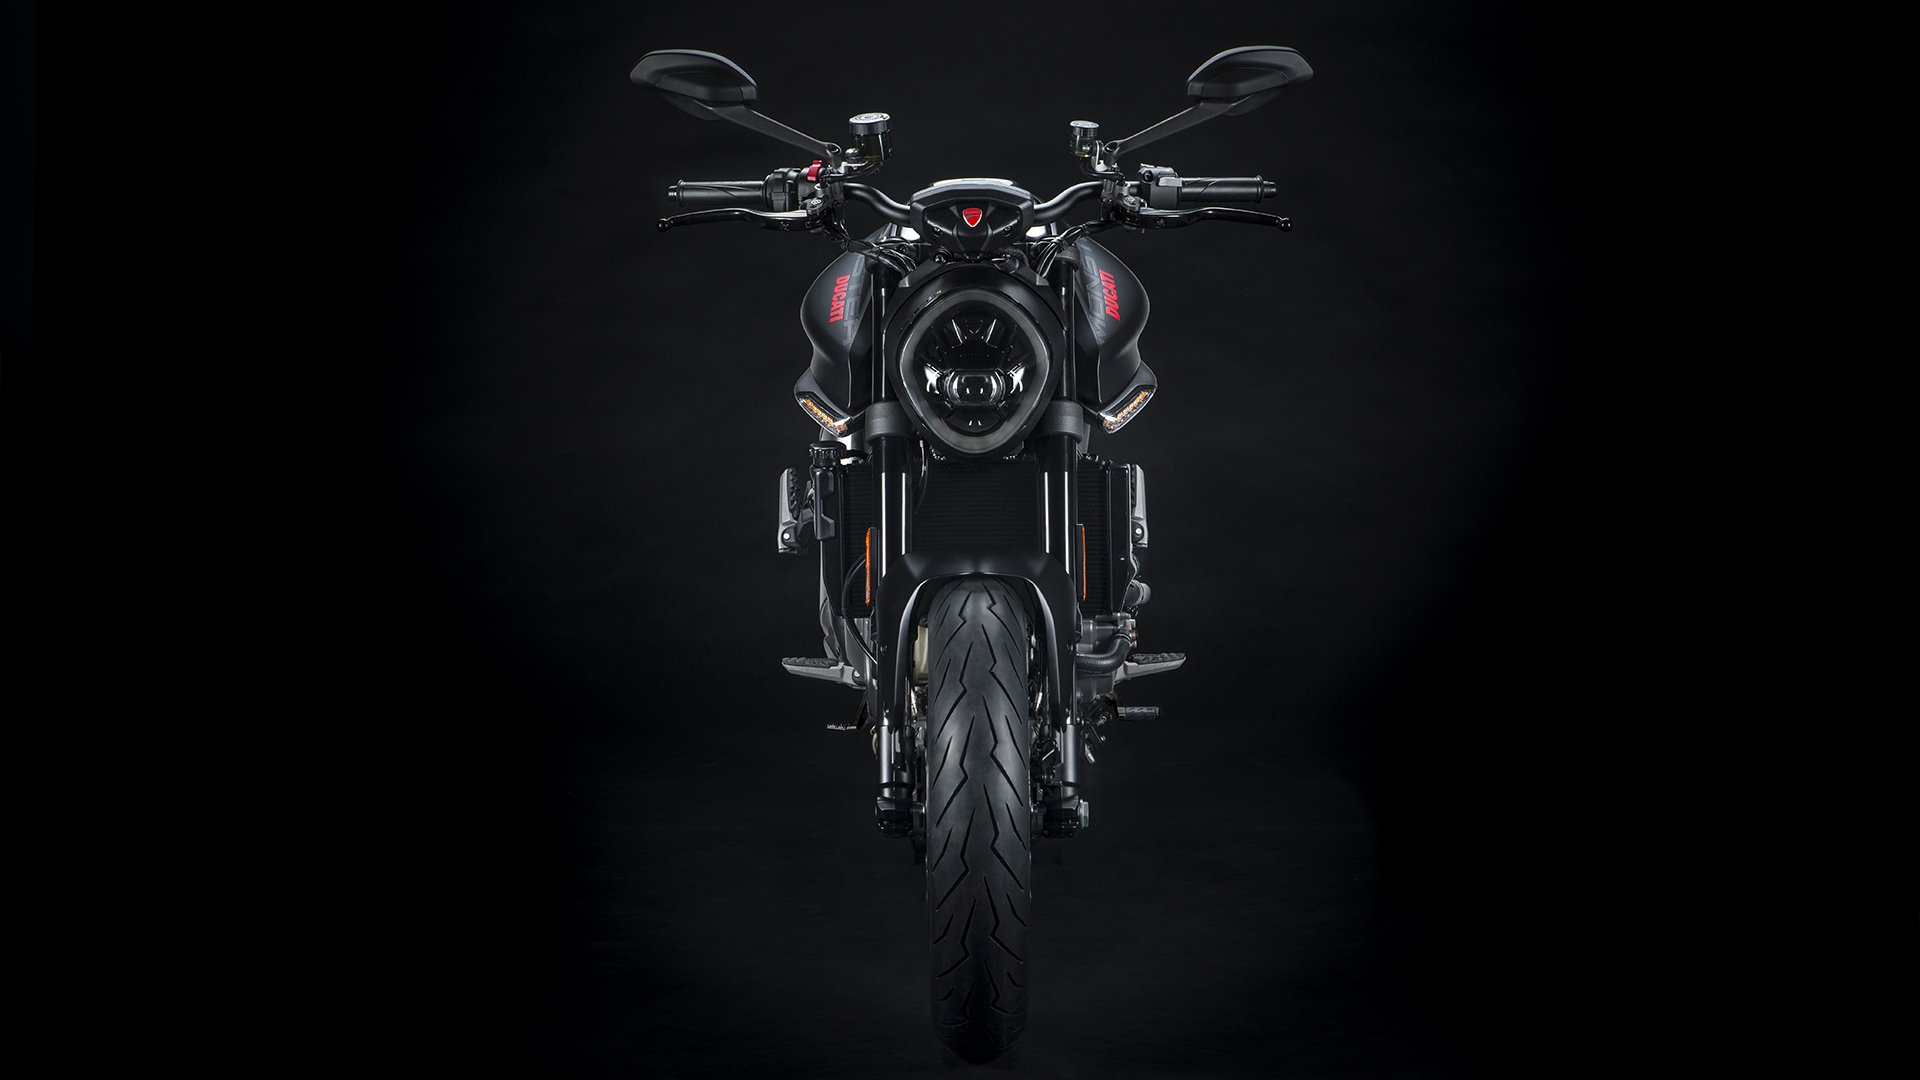 Ducati_Monster_design_gallery_03_1920x1080.jpg